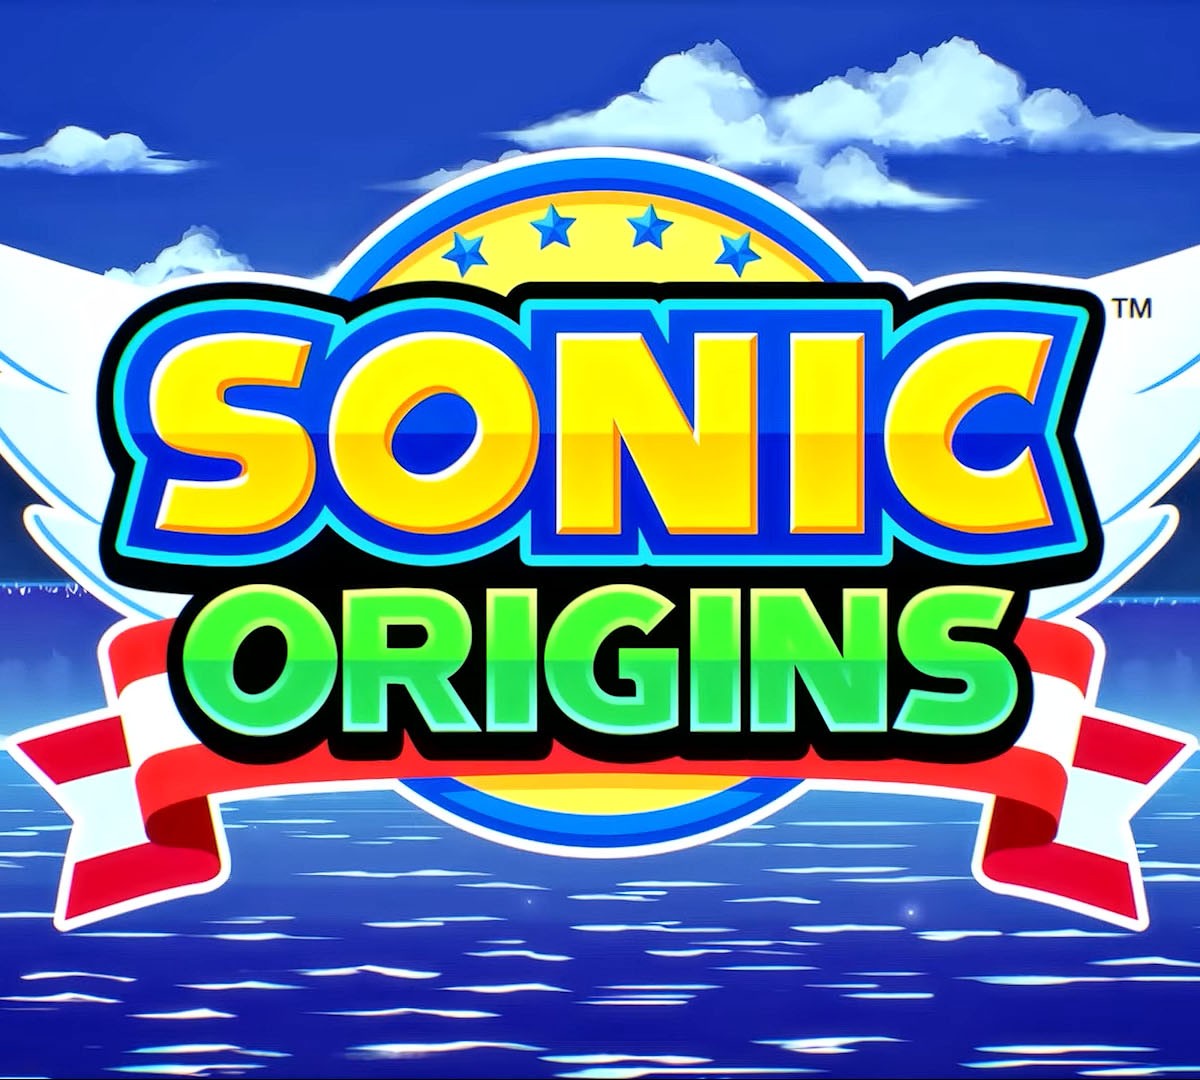 Sonic Origins: vale a pena?